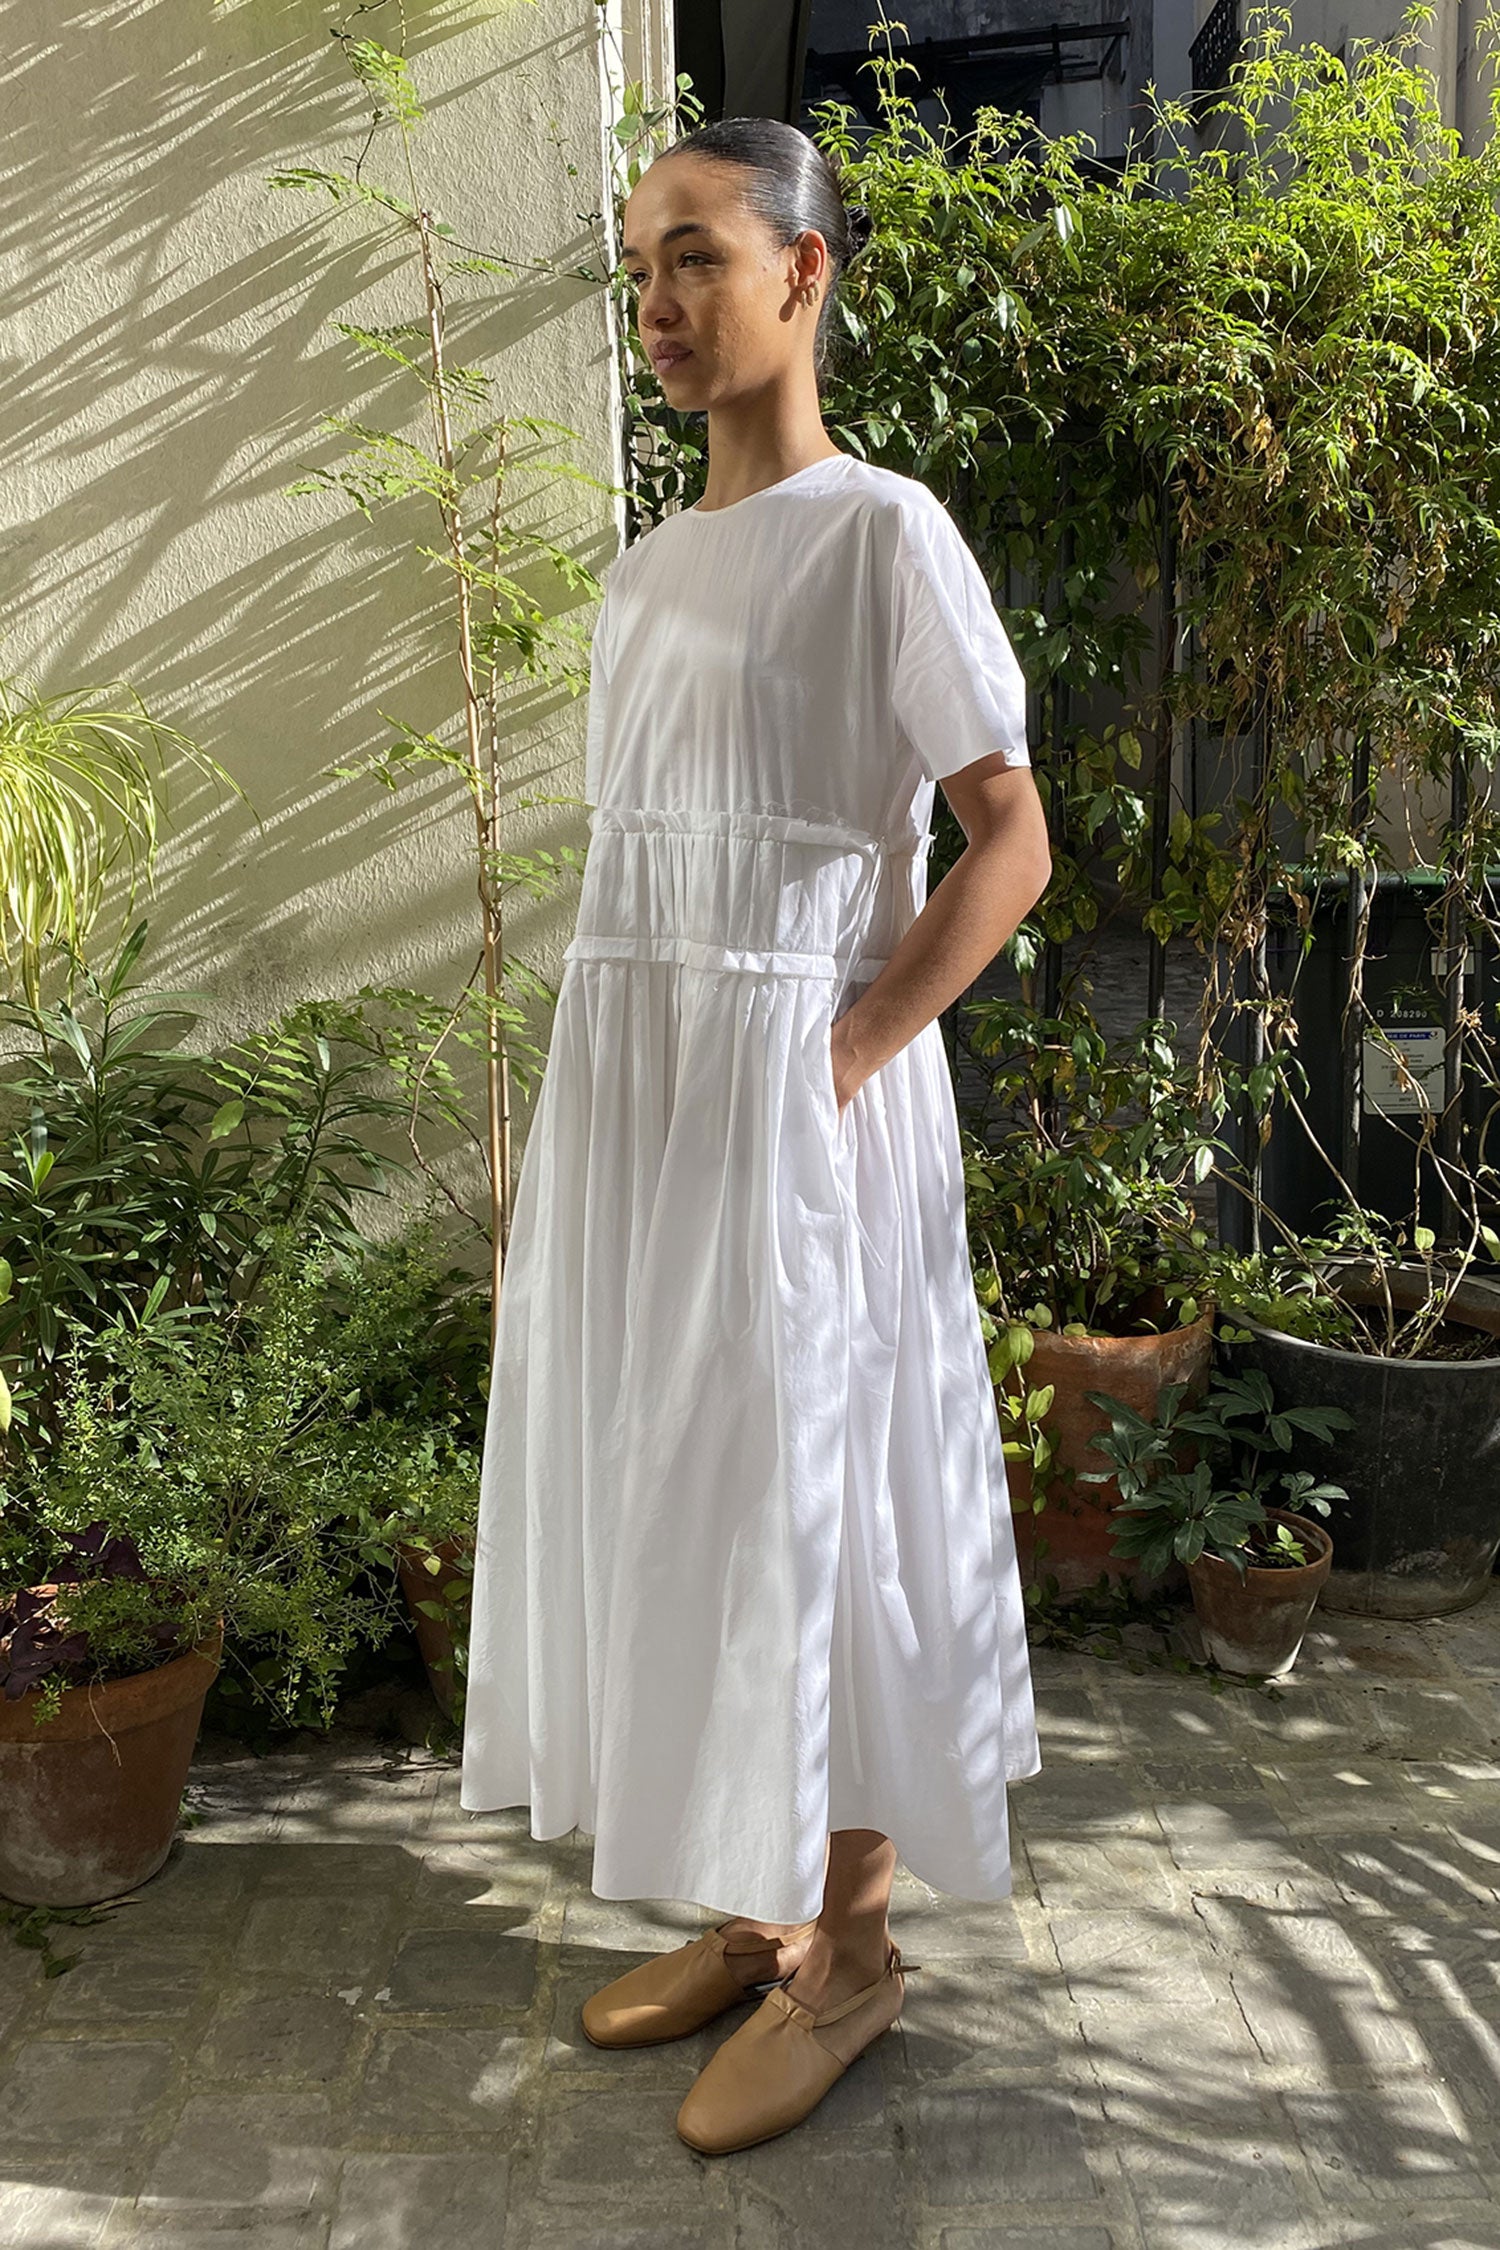 Sara Lanzi Sarita Dress Optical White